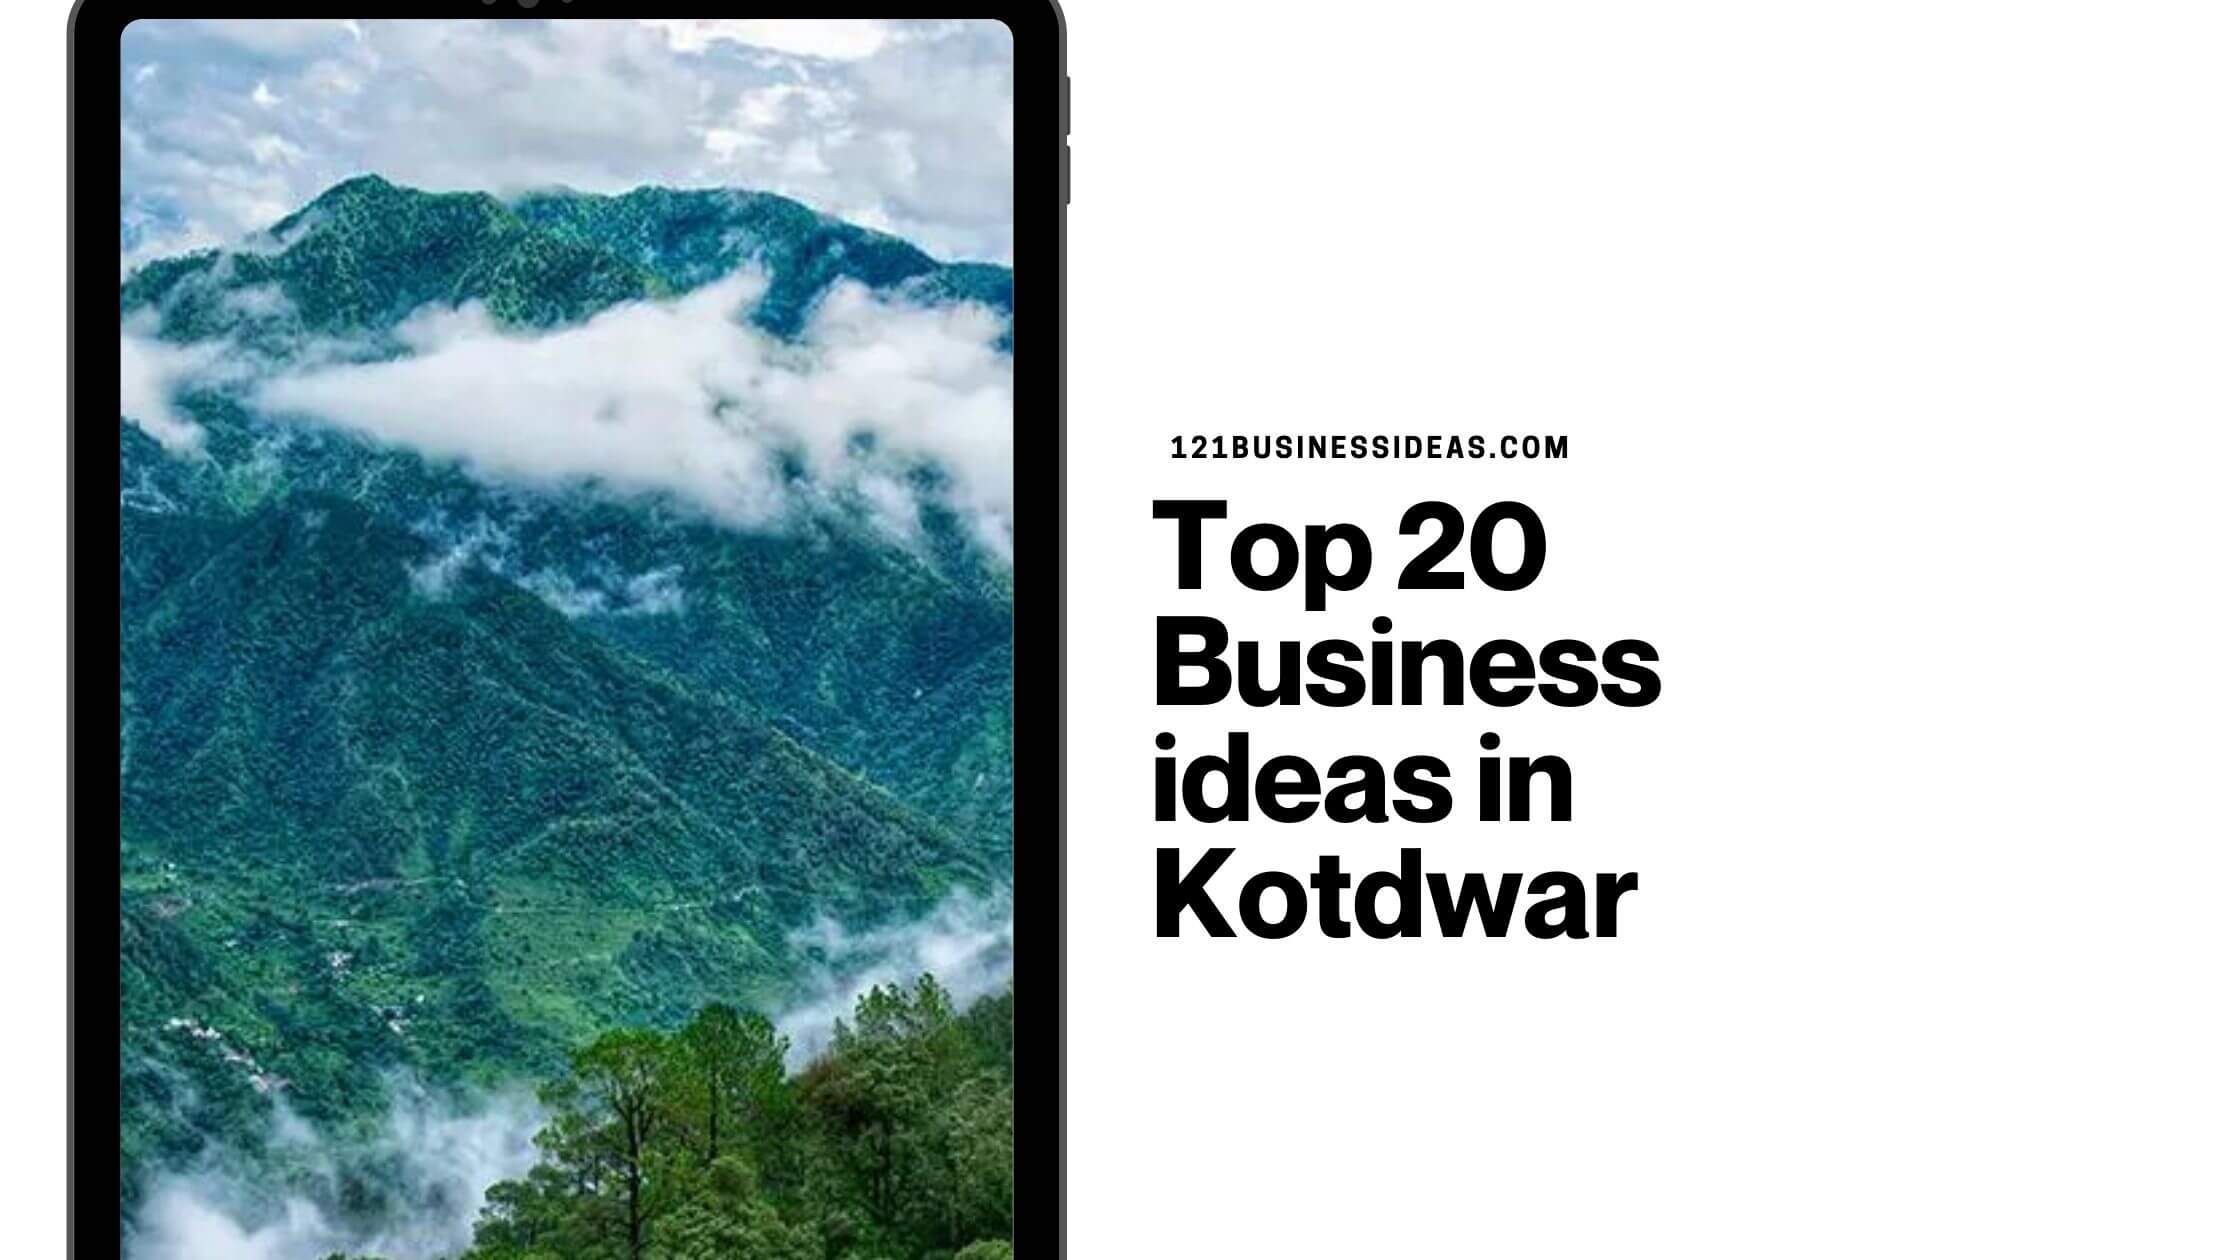 Top 20 Business ideas in Kotdwar (1)